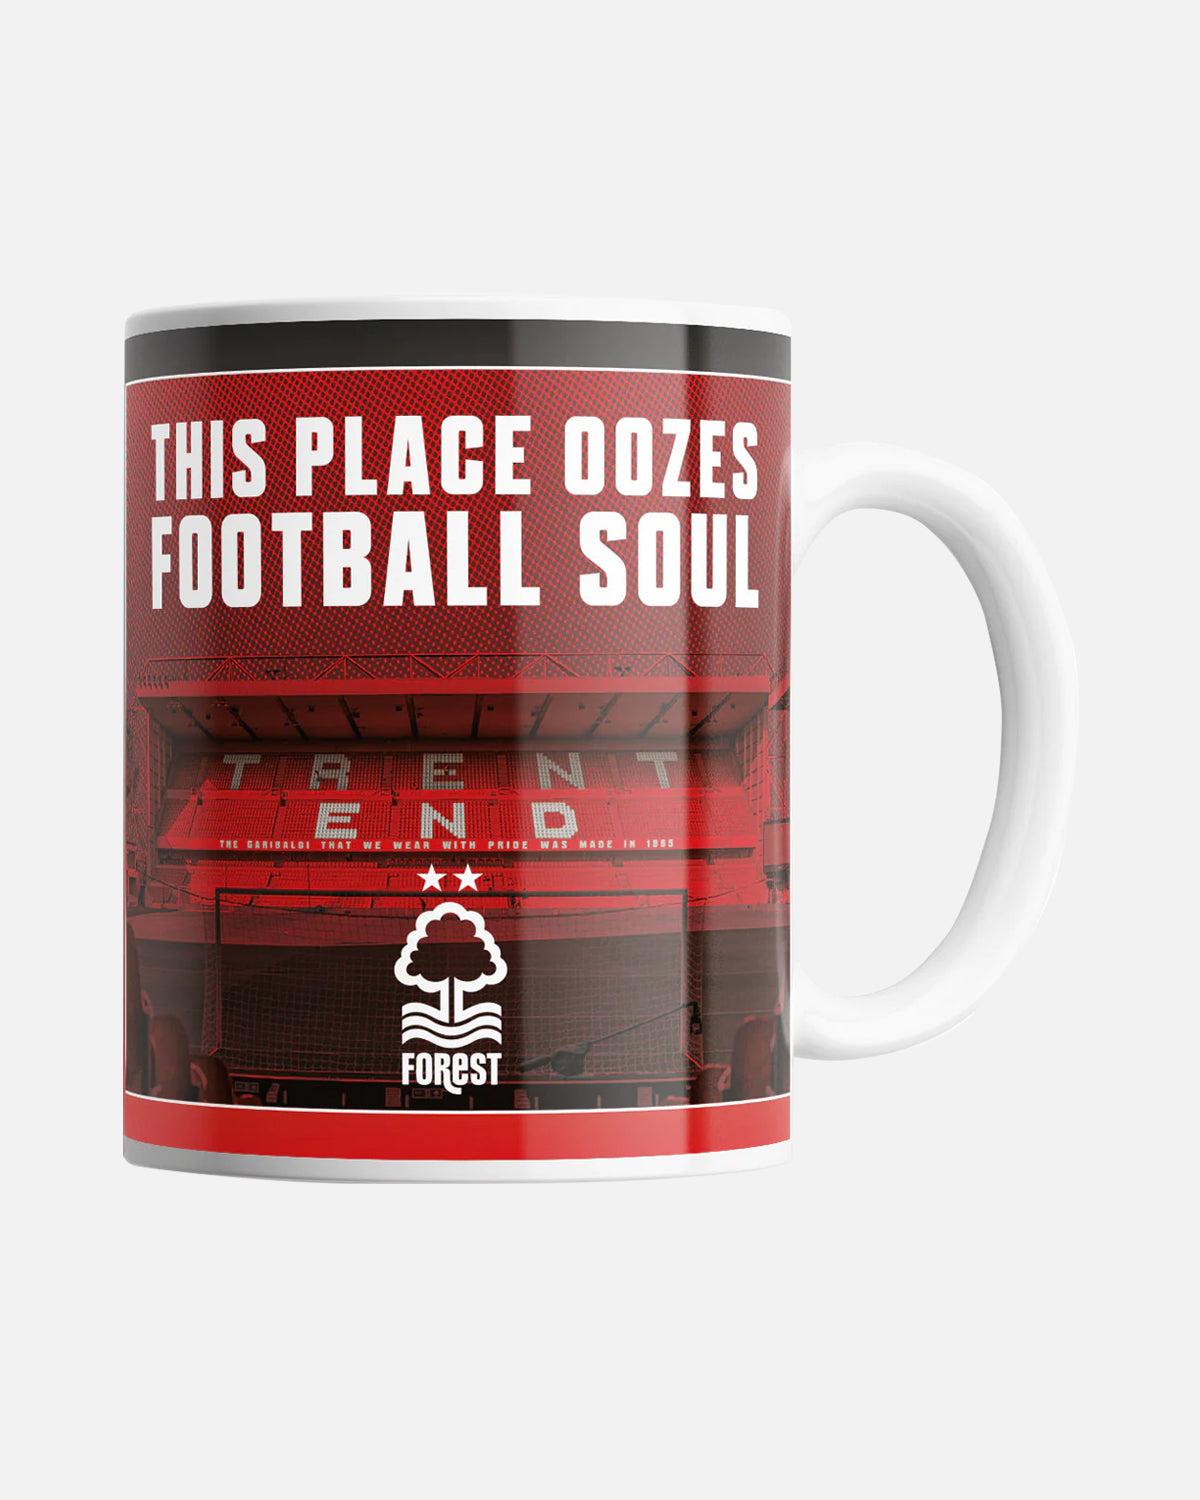 NFFC Oozes Football Soul Mug